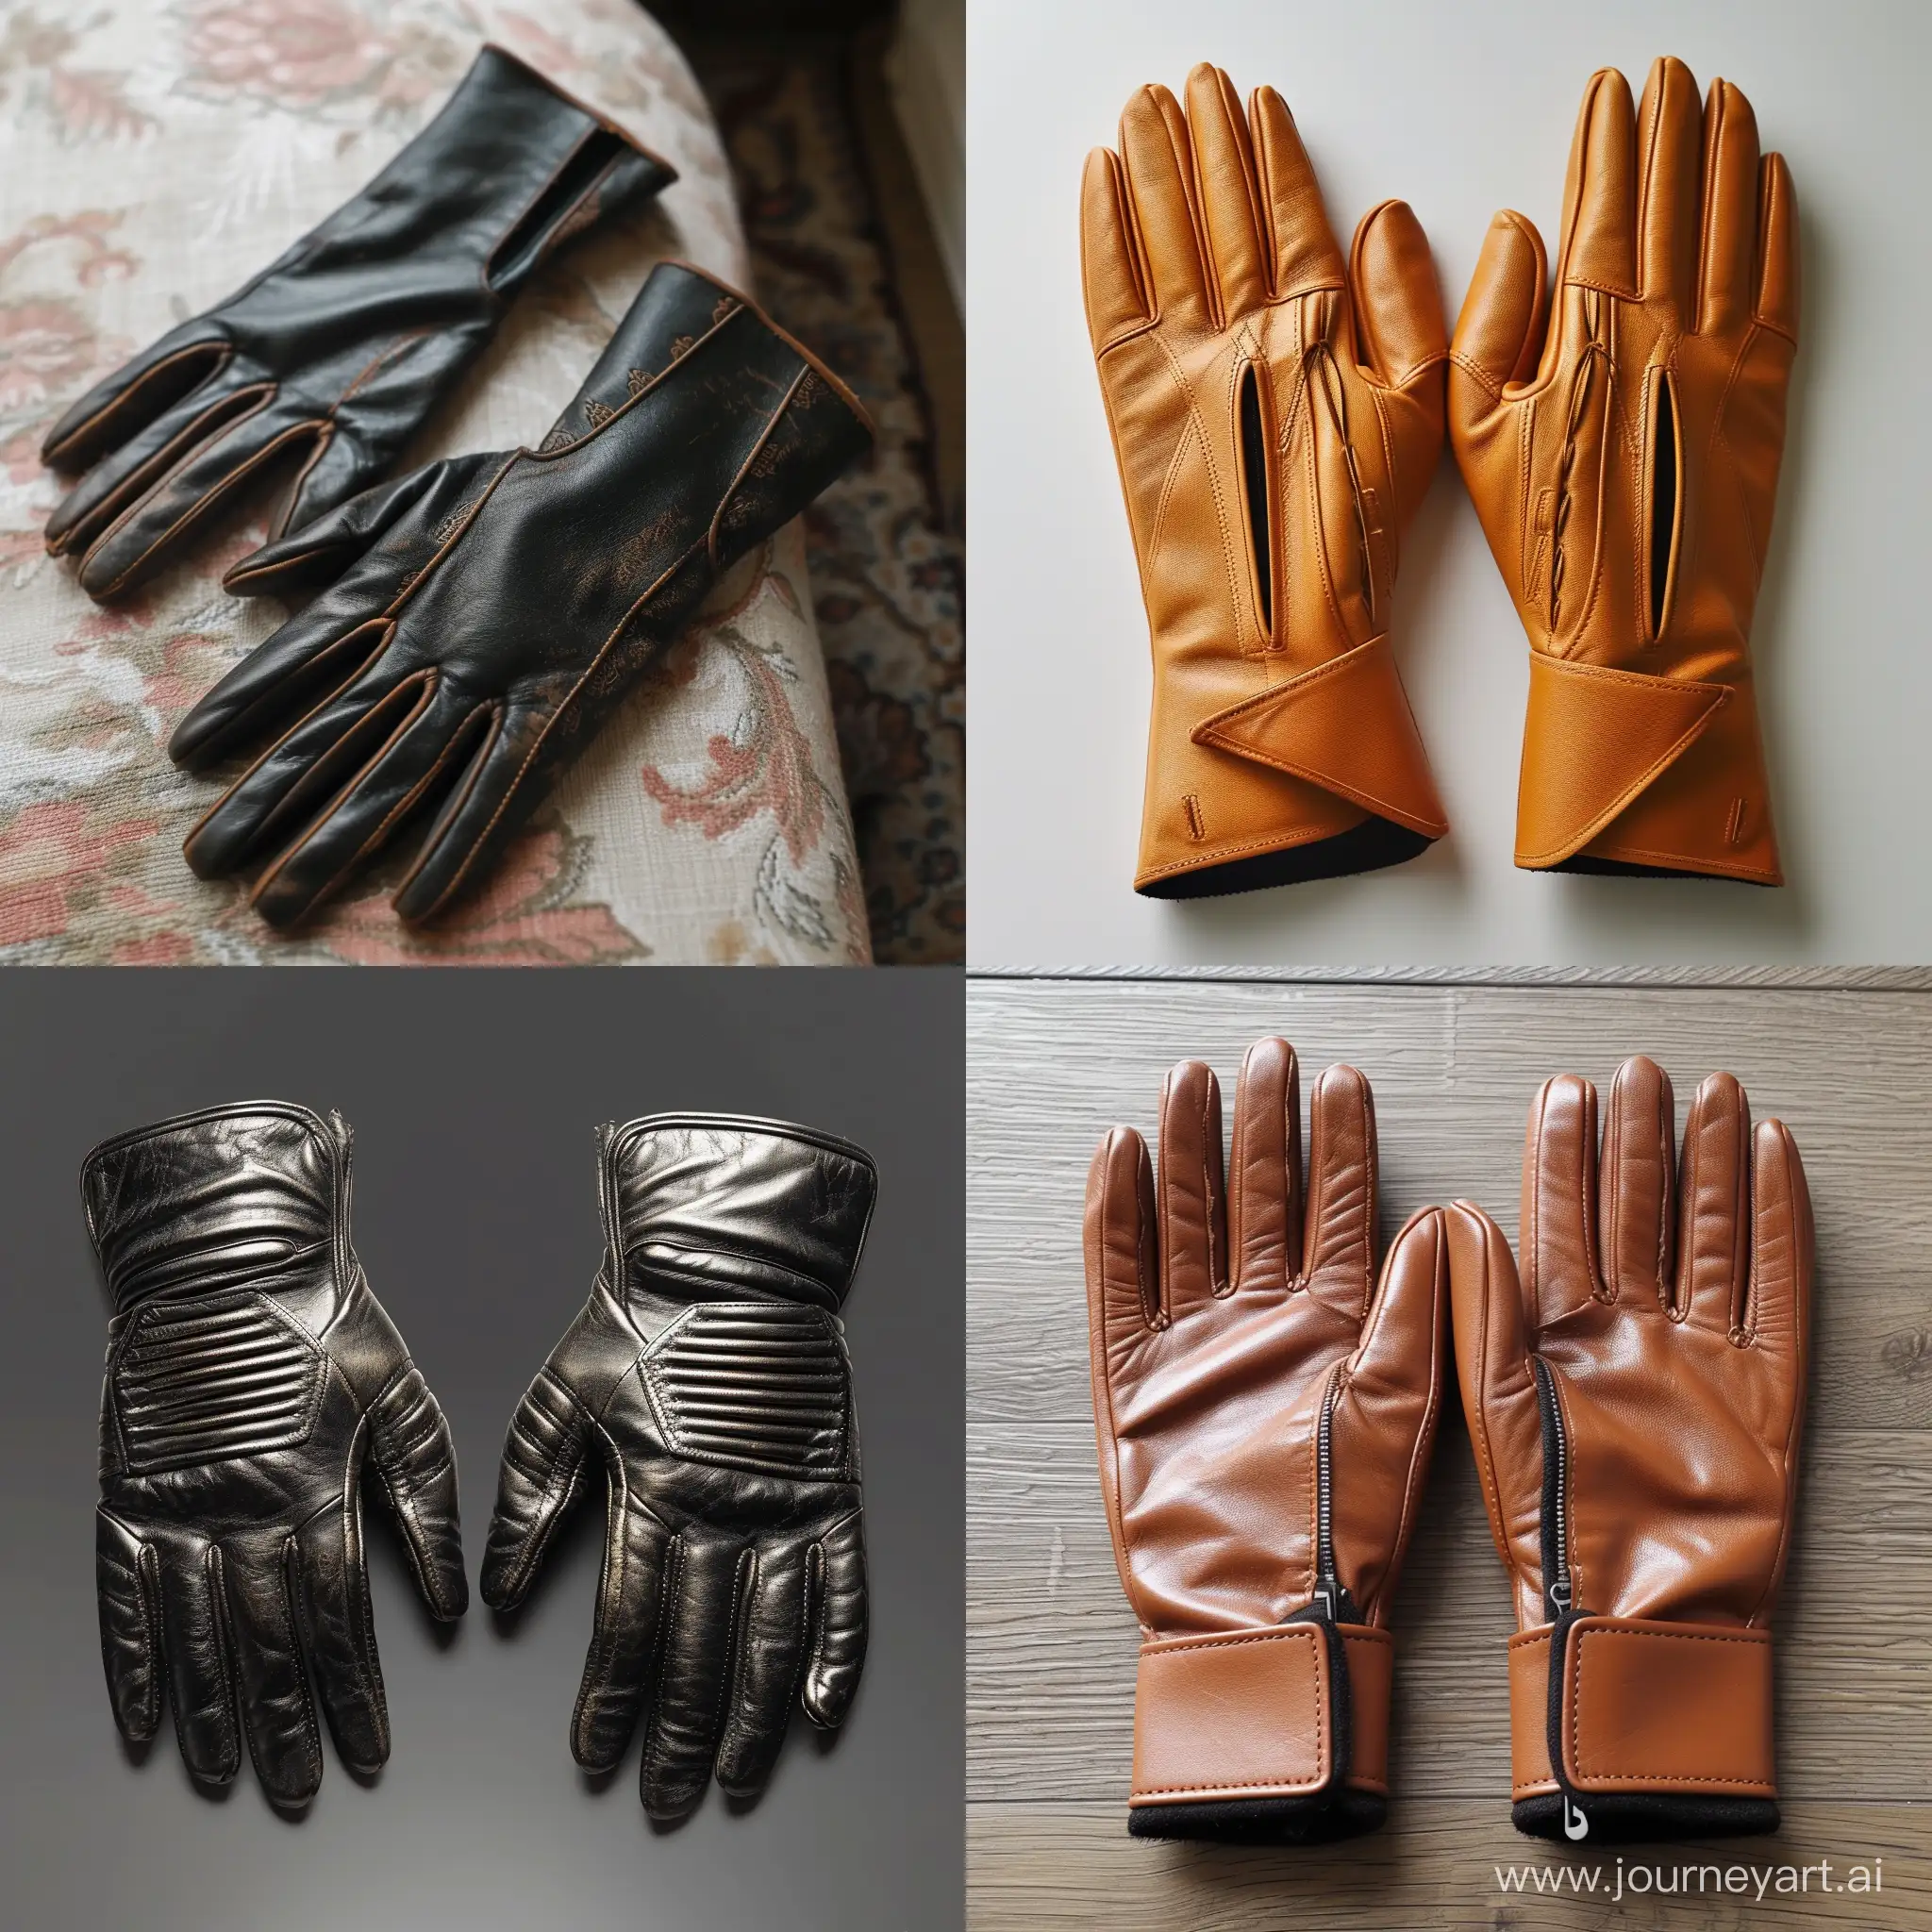 Stylish-Leather-Gloves-on-Vibrant-Display